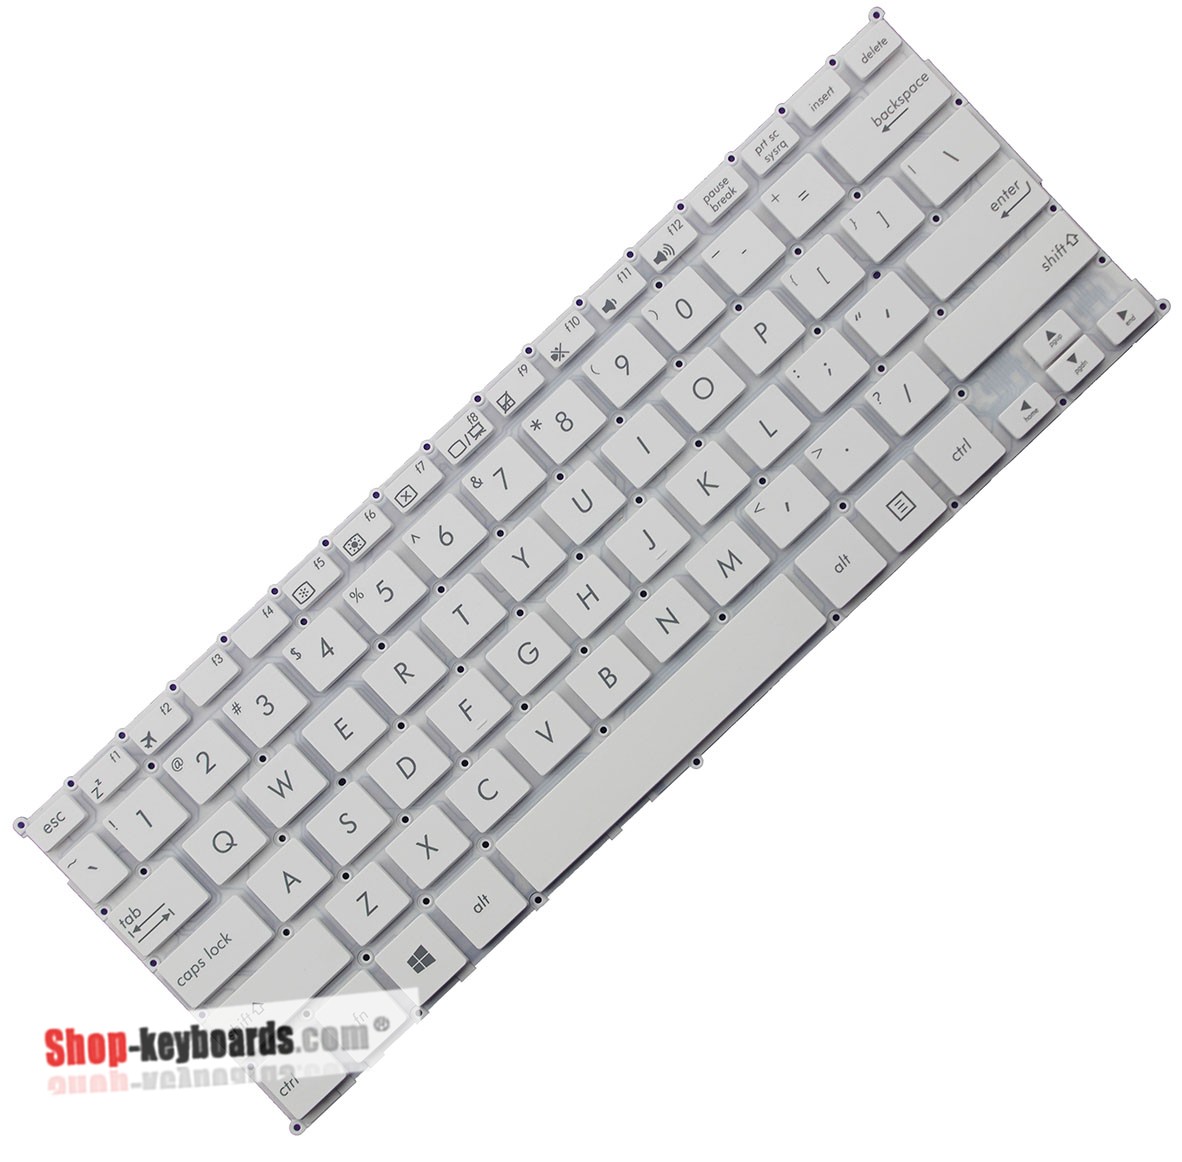 Asus NSK-URLSQ Keyboard replacement